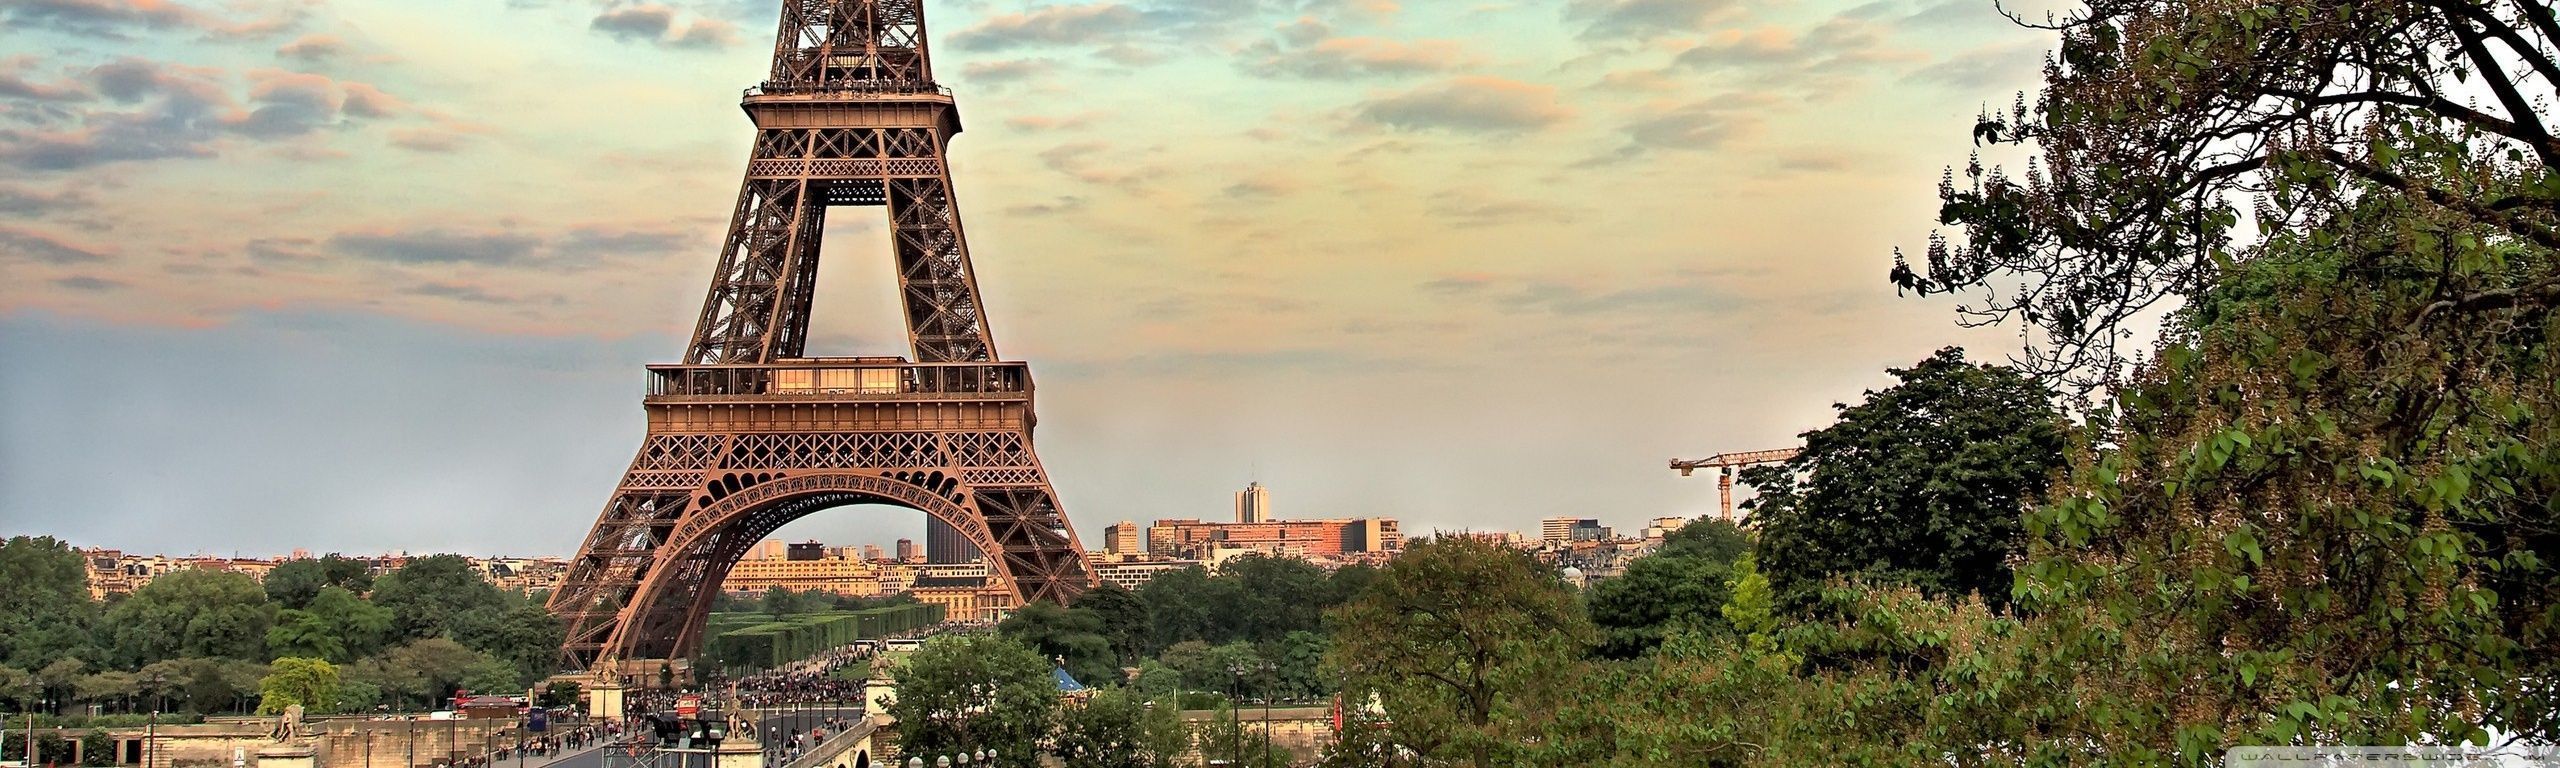 Eiffel Tower in Paris, France, seen from Trocadero, a popular tourist destination. - France